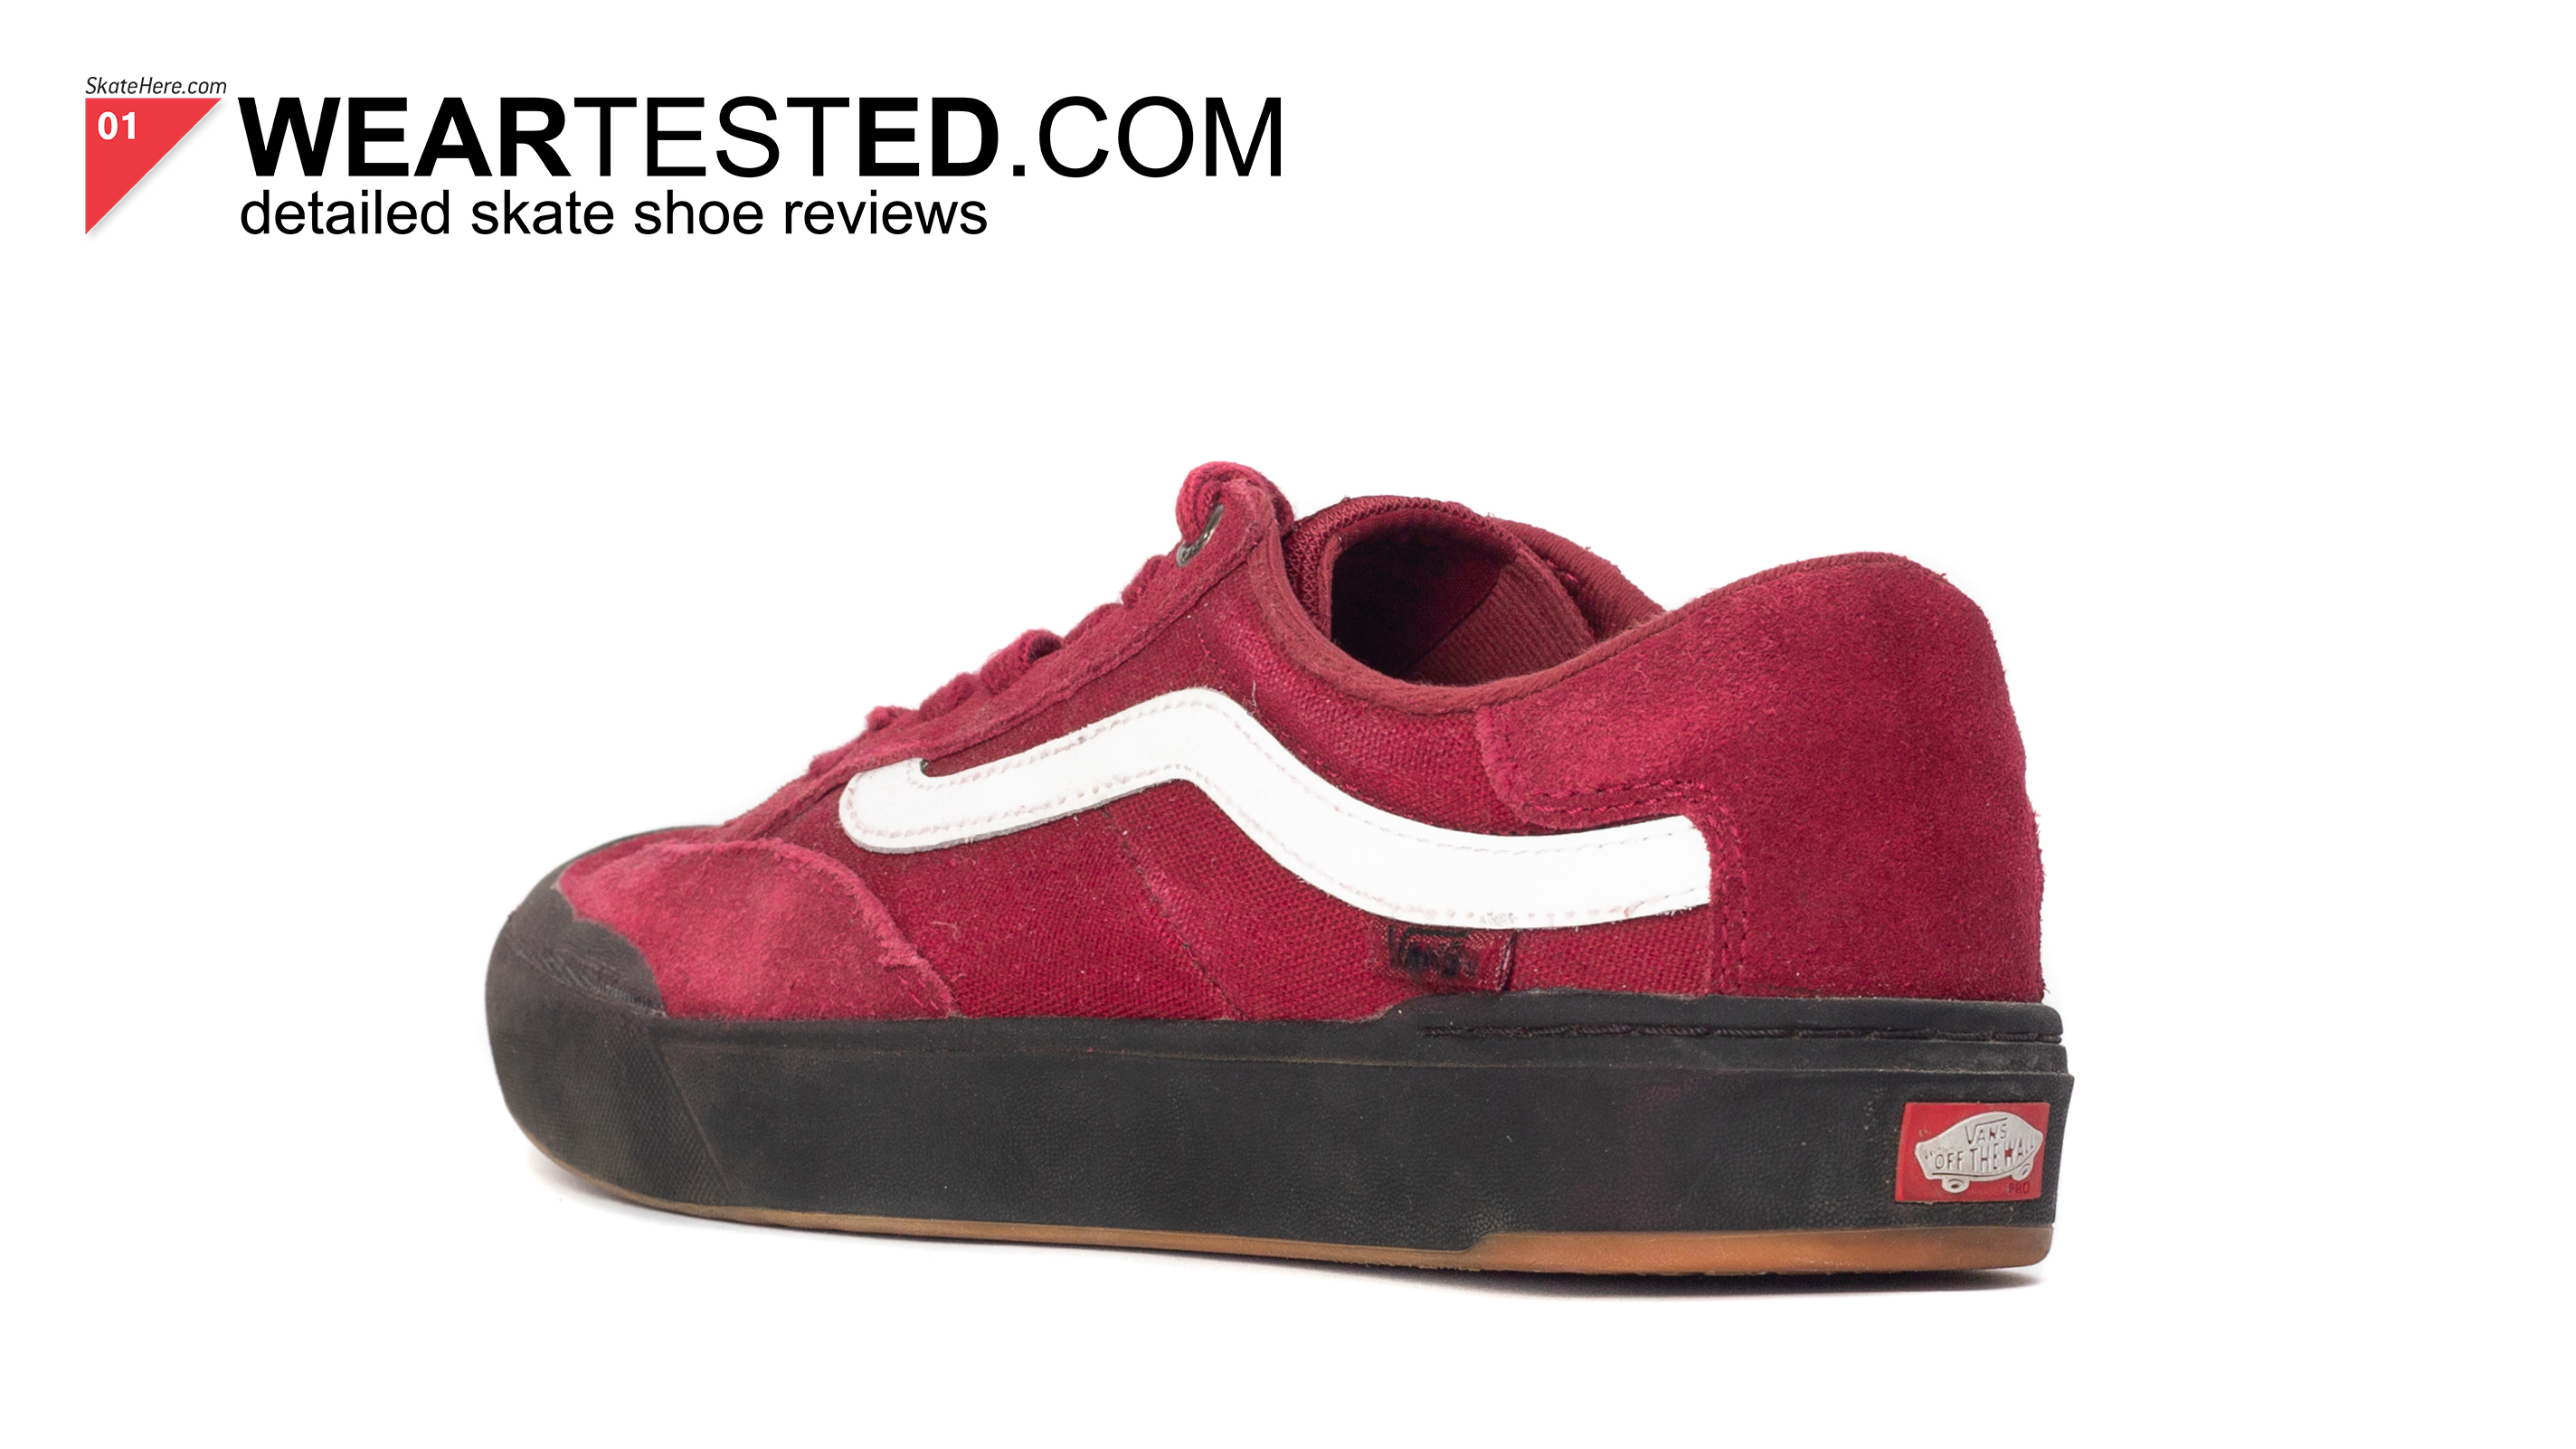 Vans Berle Pro - Weartested - detailed skate shoe reviews